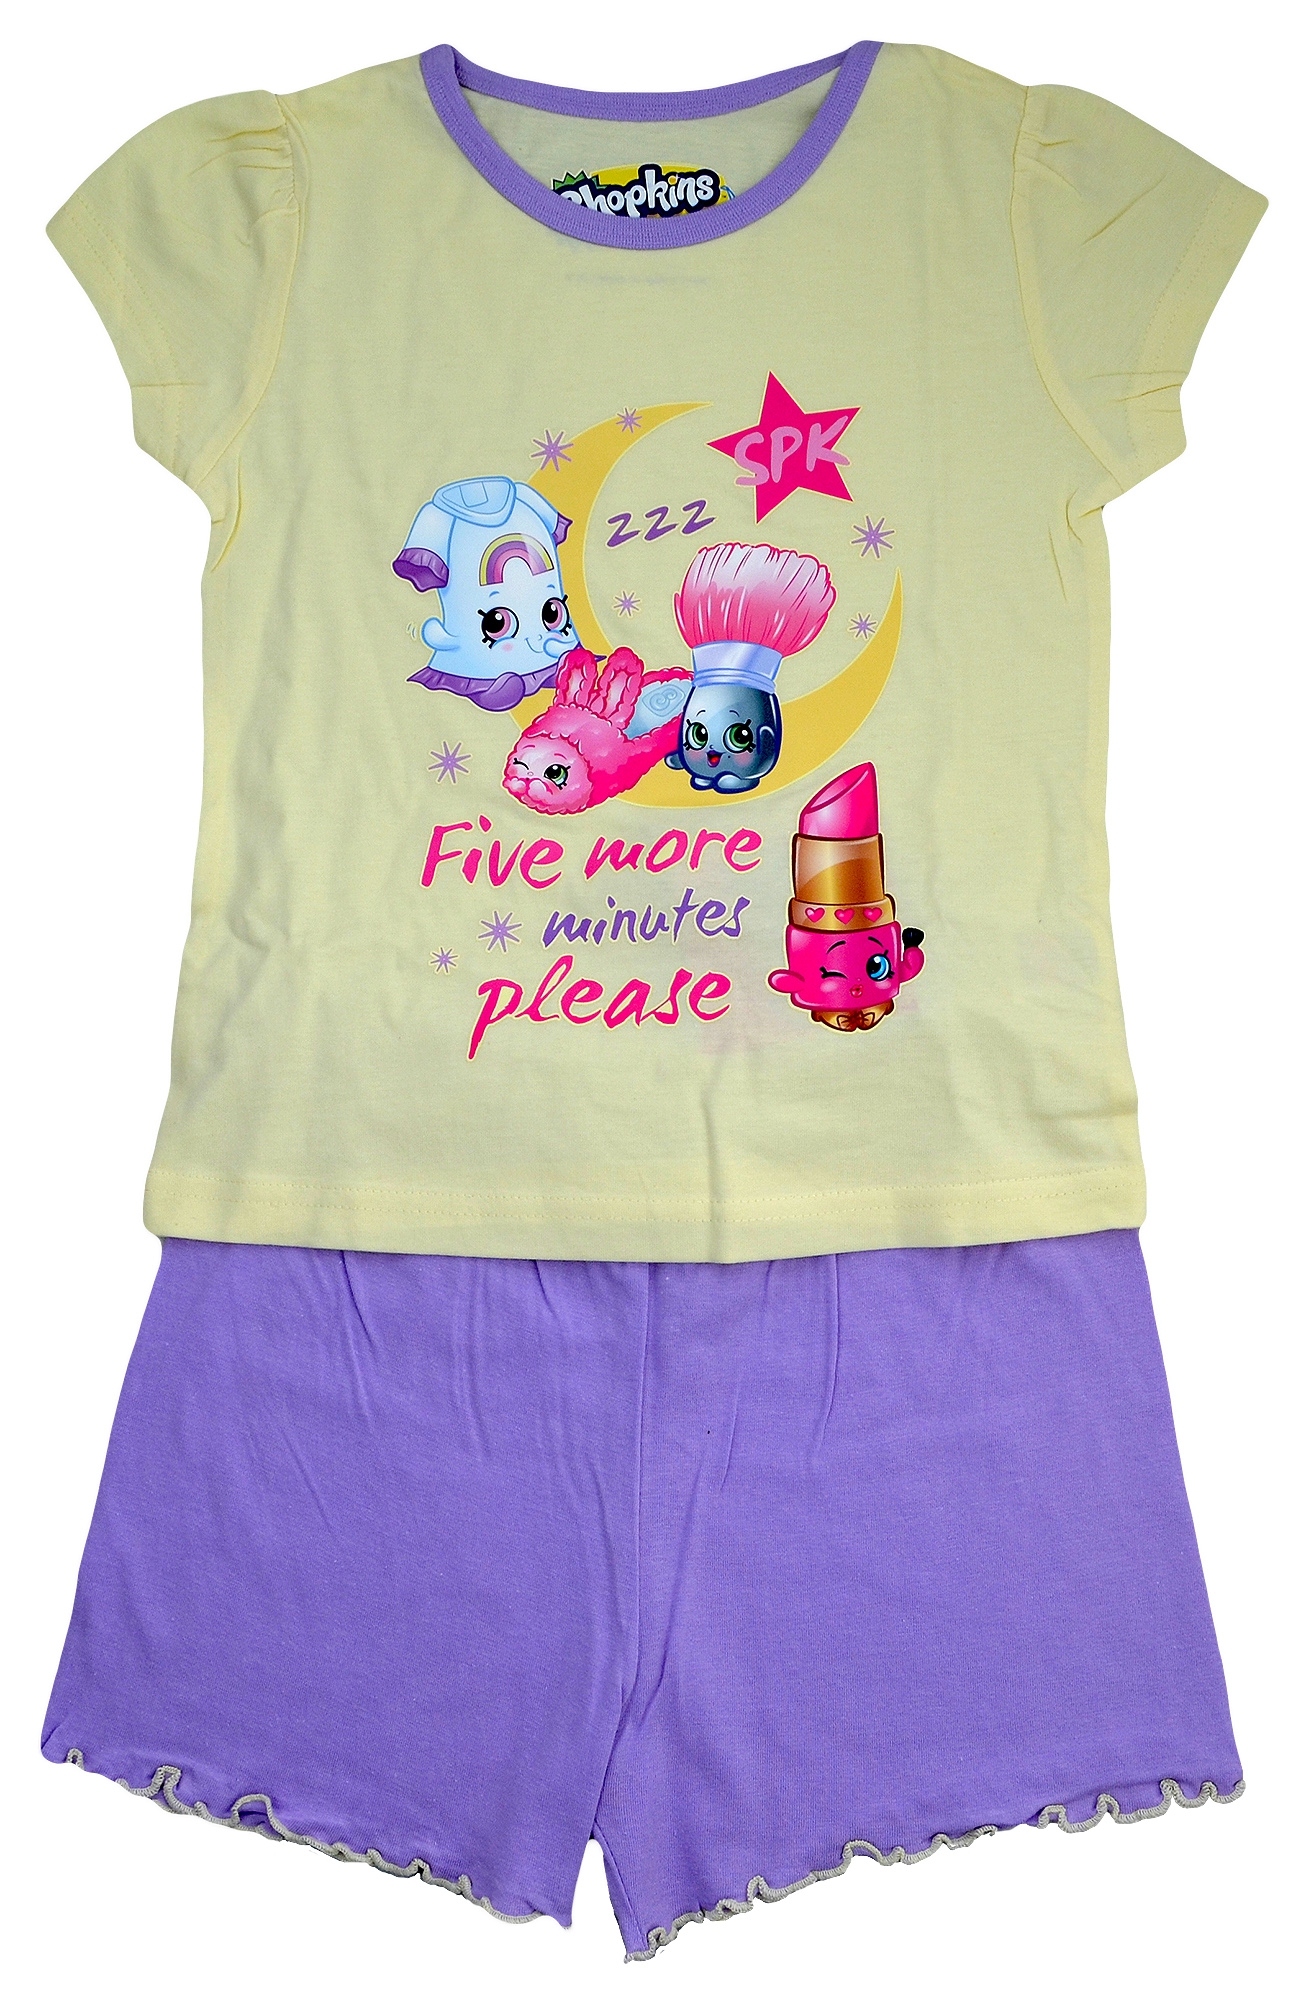 Shopkins 'Please' Girls Short Pyjama Set 7-8 Years